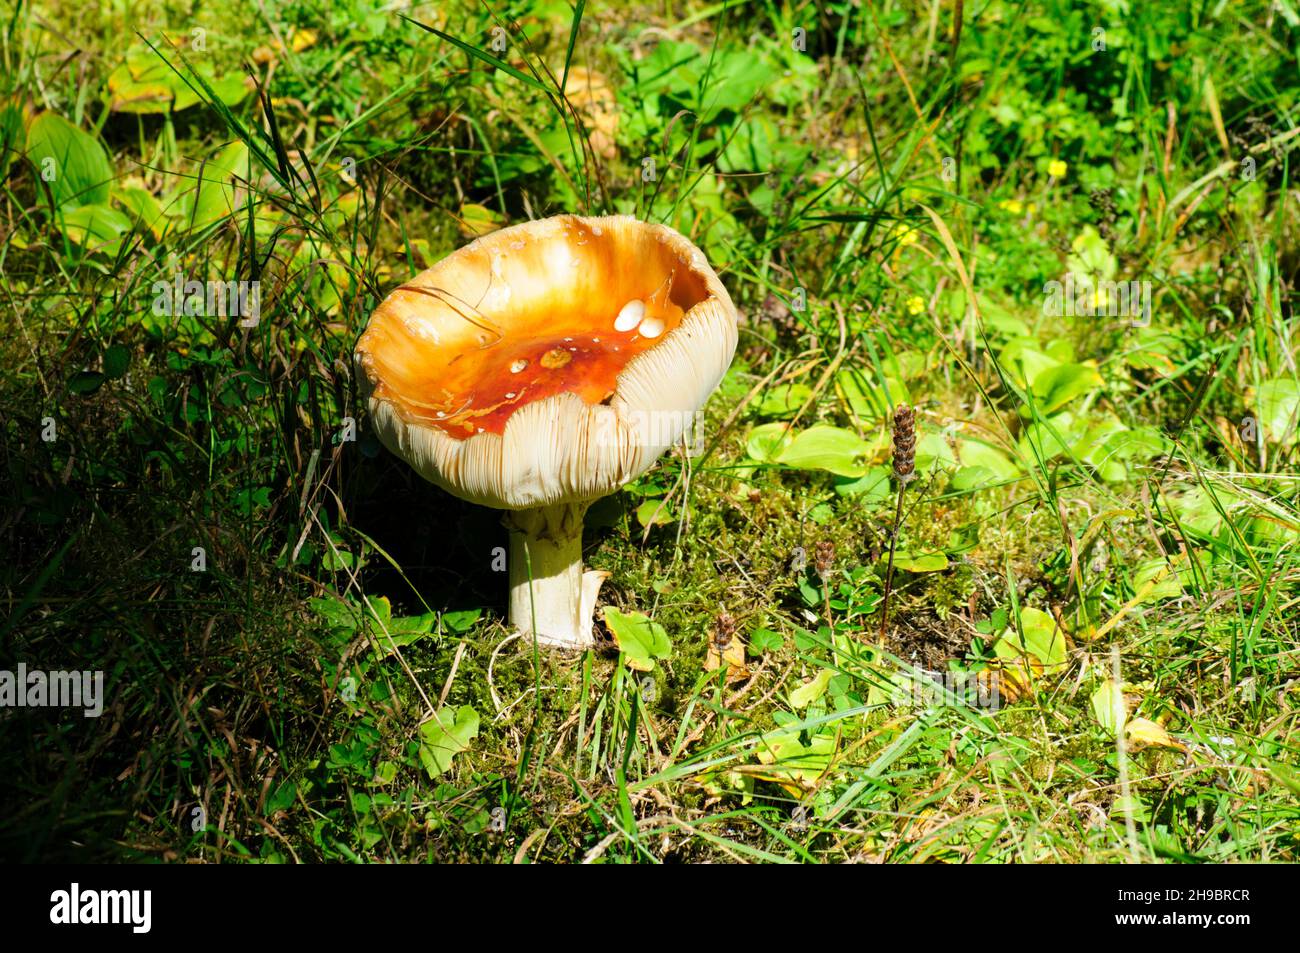 mushroom growing on the forest floor, Tirol Austria Stock Photo